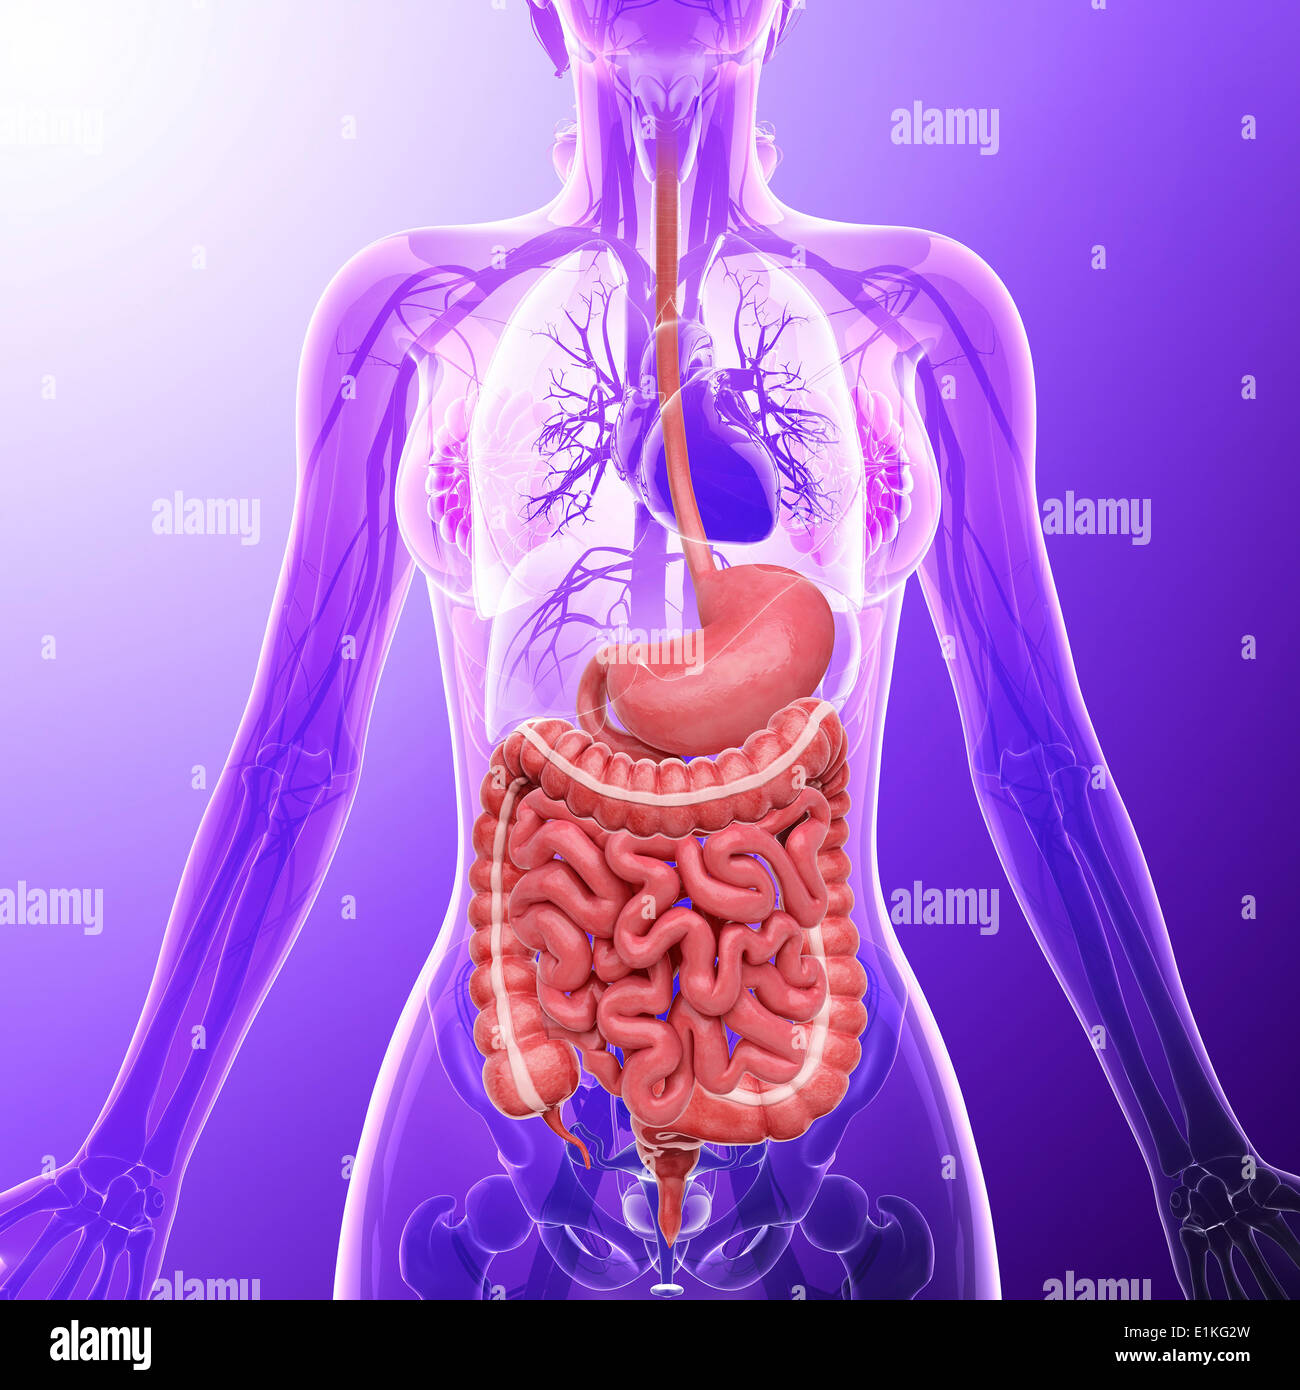 Human digestive system computer artwork Stock Photo - Alamy